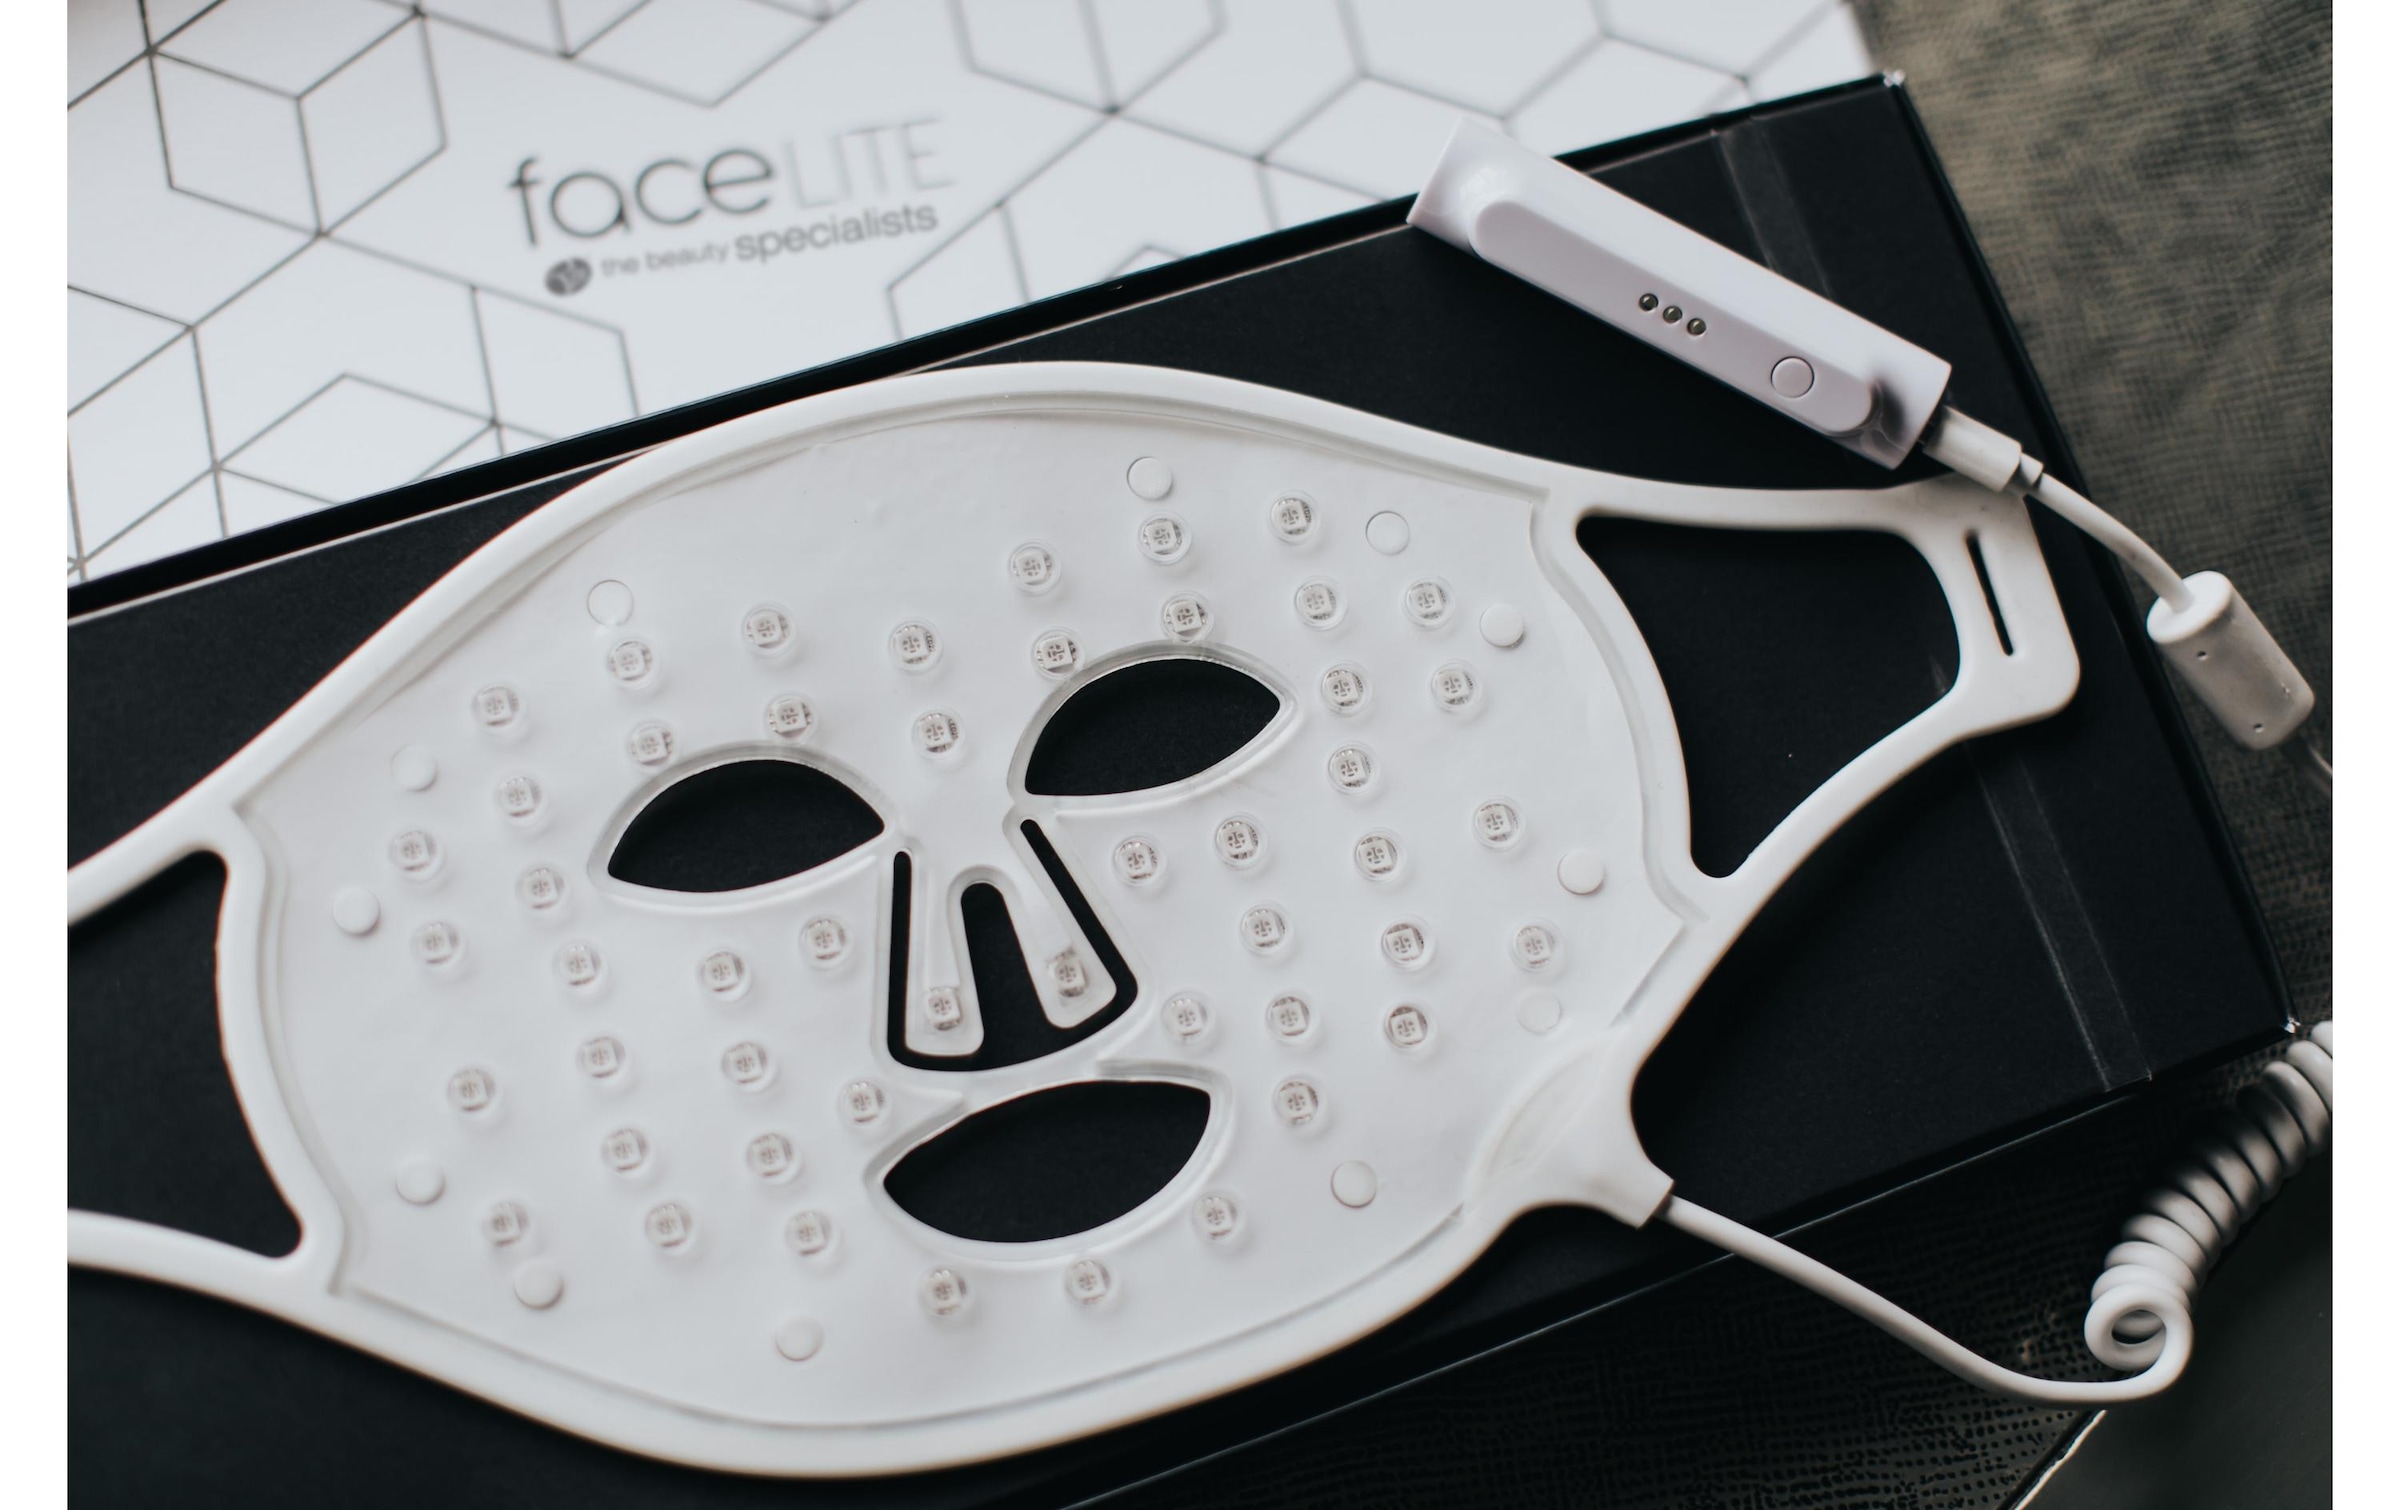 Rio Anti-Aging-Gerät »LED Gesichtsmassage«